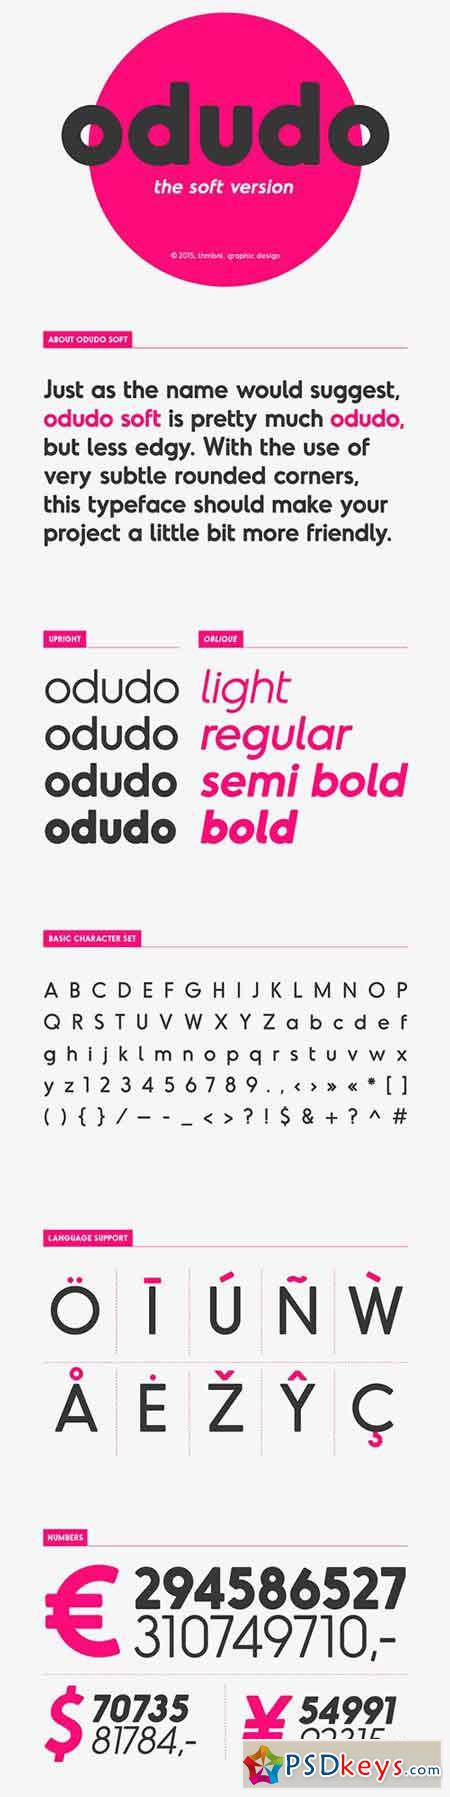 Odudo Soft Font - Typeface 466695 - 8 FONTS